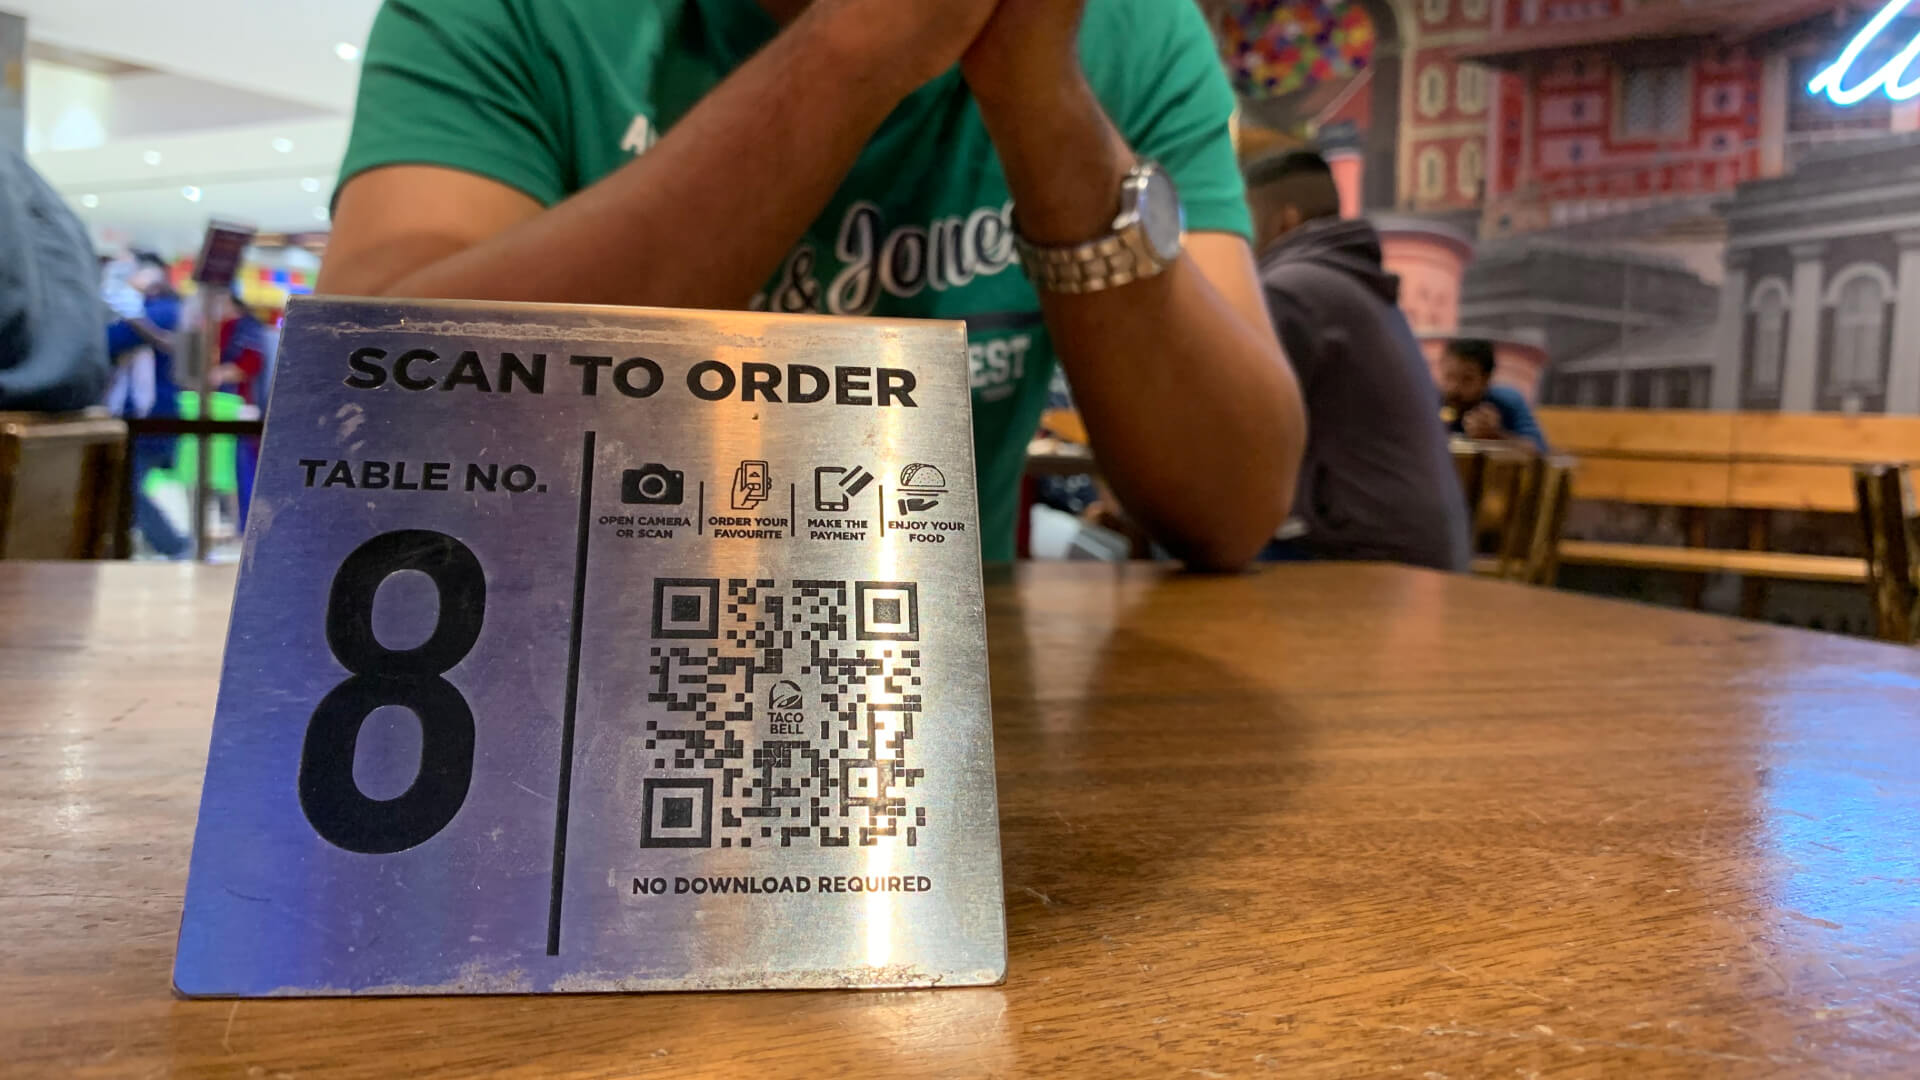 A restaurant using QR codes for digital menu ordering options.